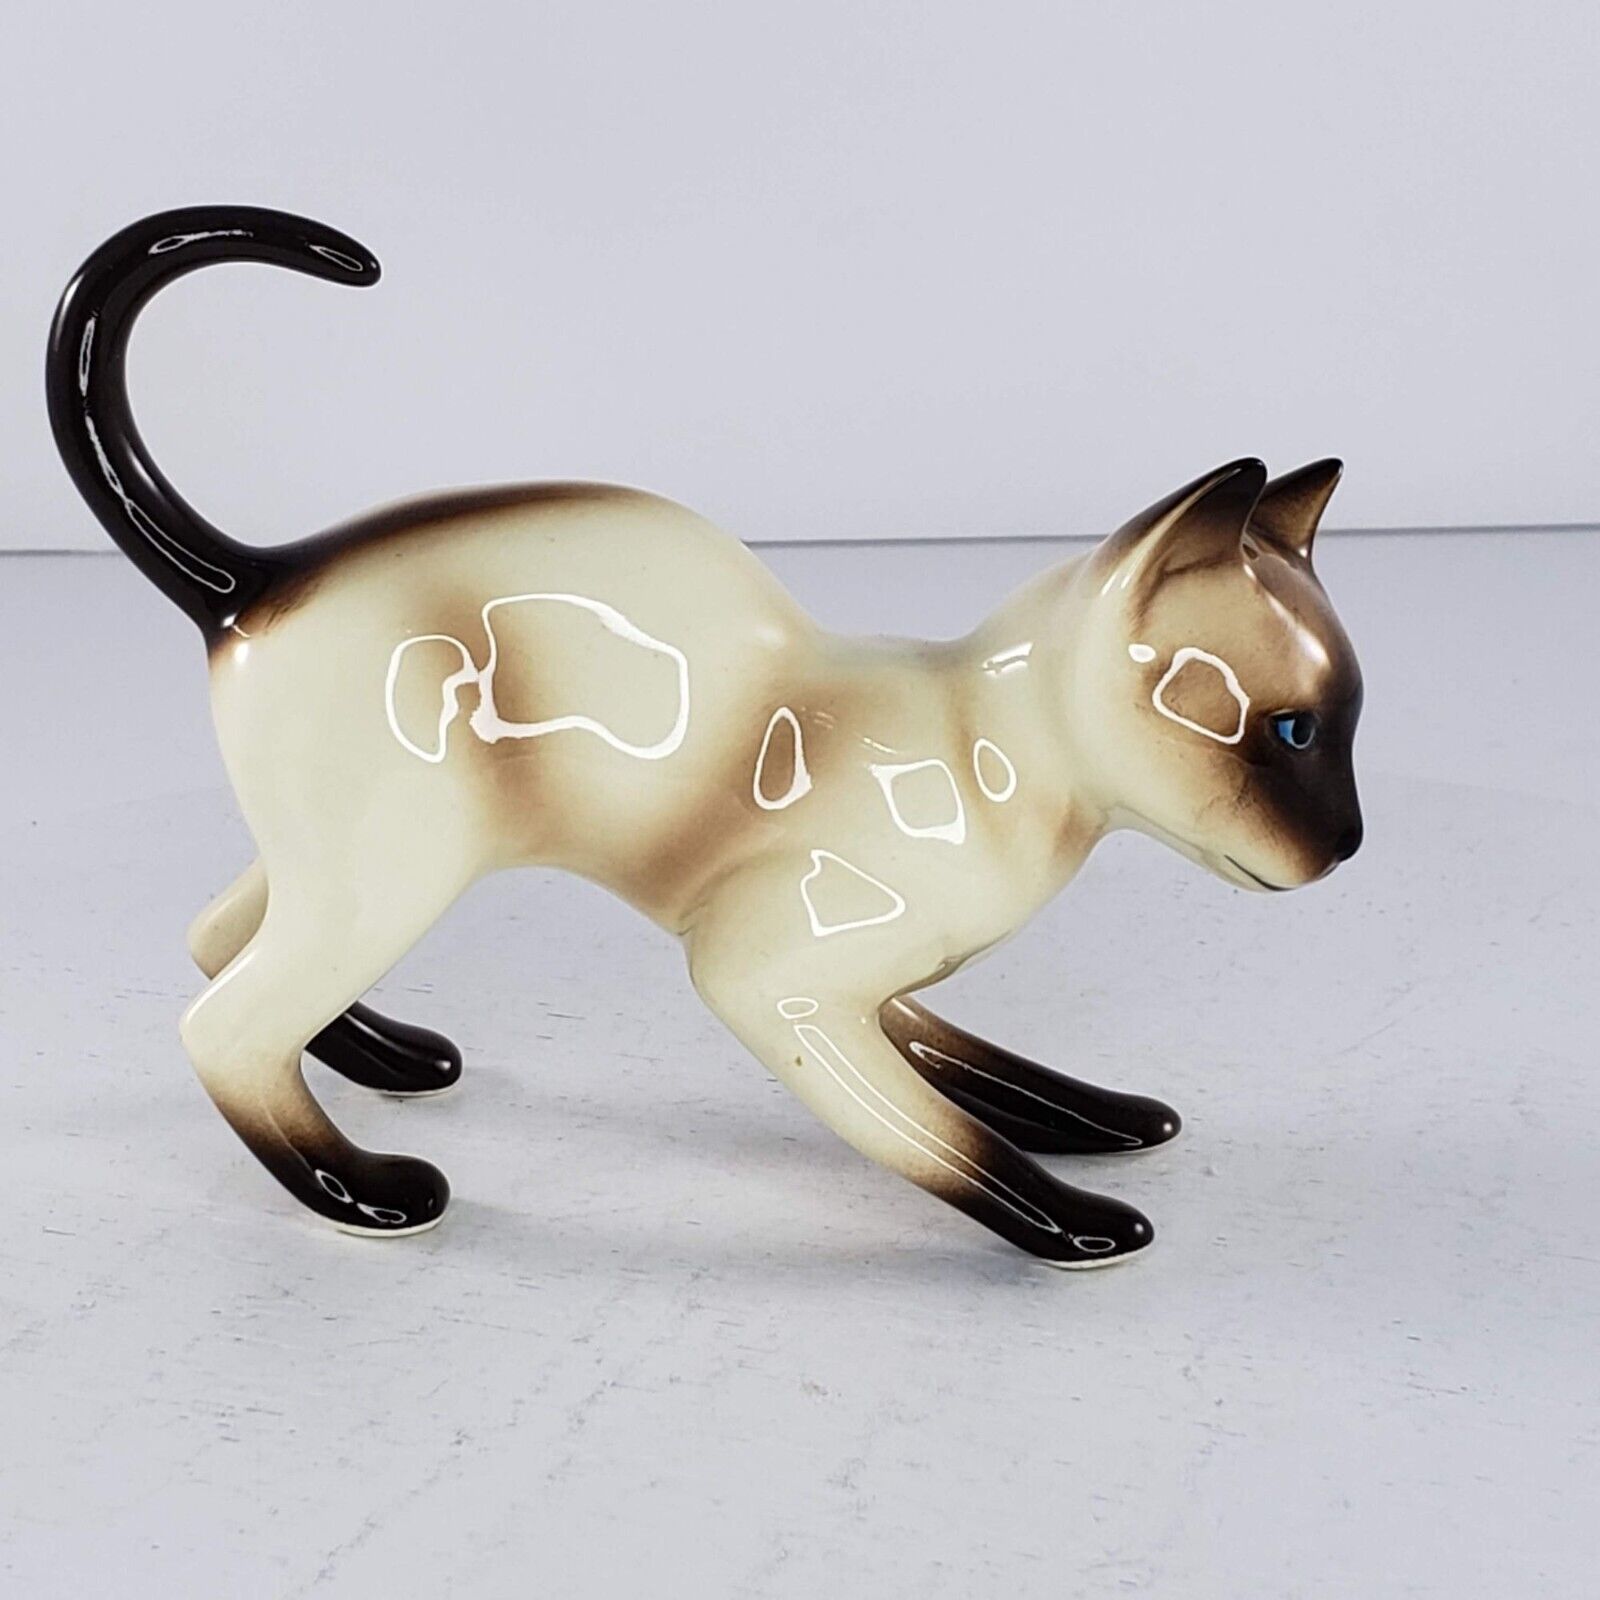 Josef Originals Glossy Siamese Kitten Figurine Cat - $34.99